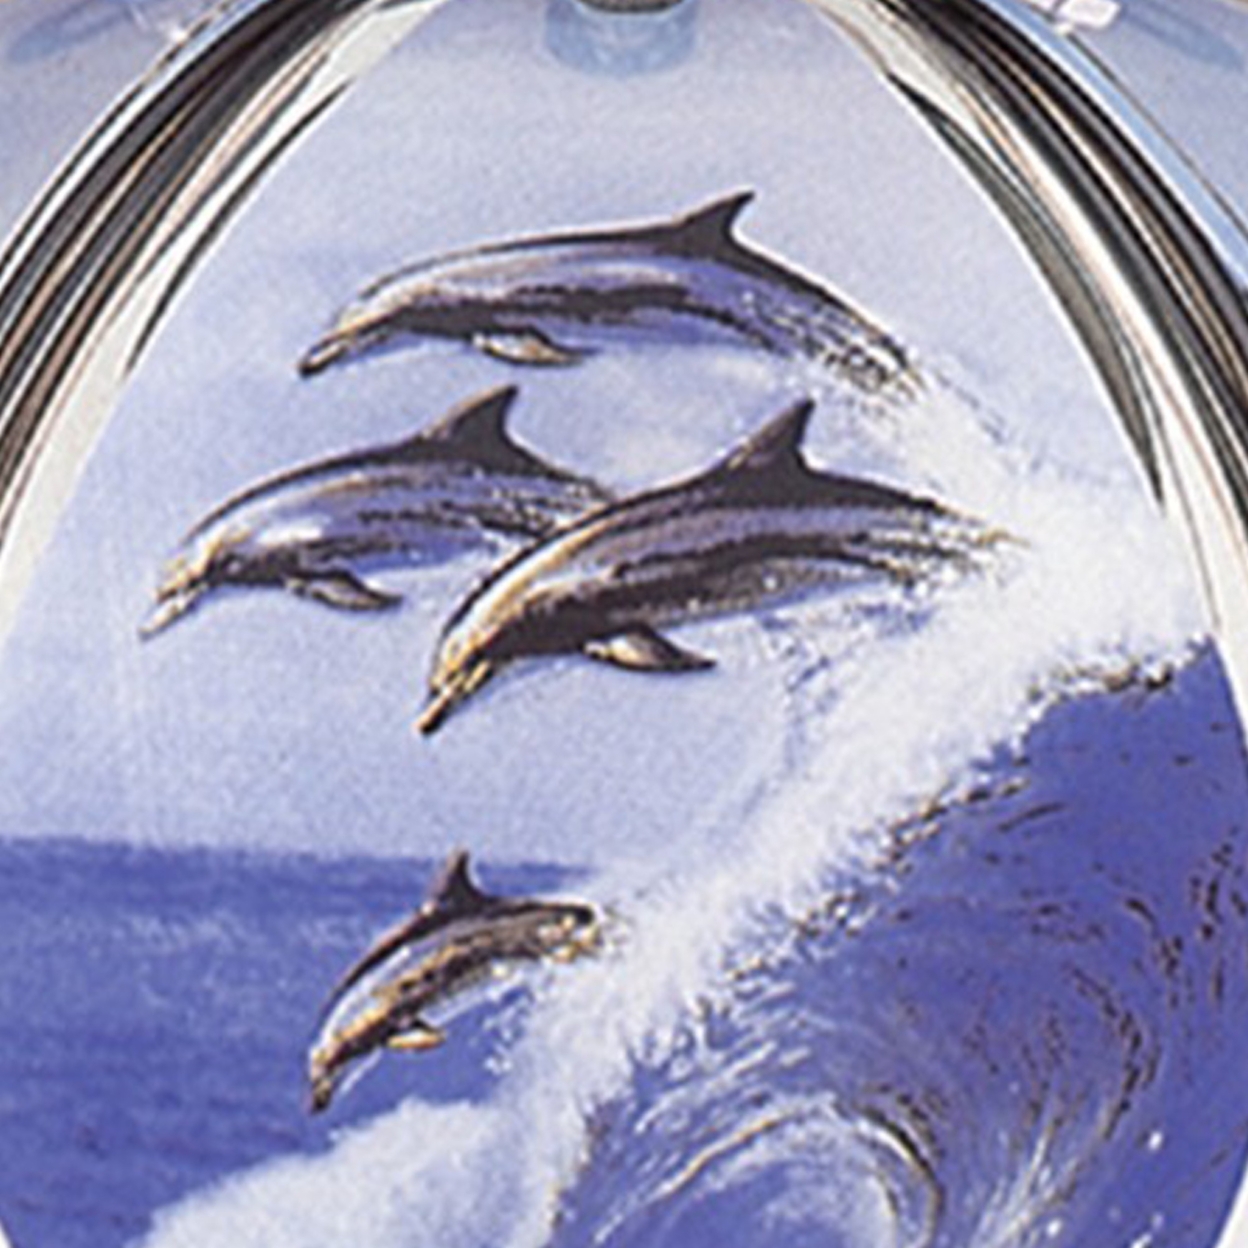 Umbrella Shade Glass Table Lamp With Dolphin Print, Silver- Saltoro Sherpi